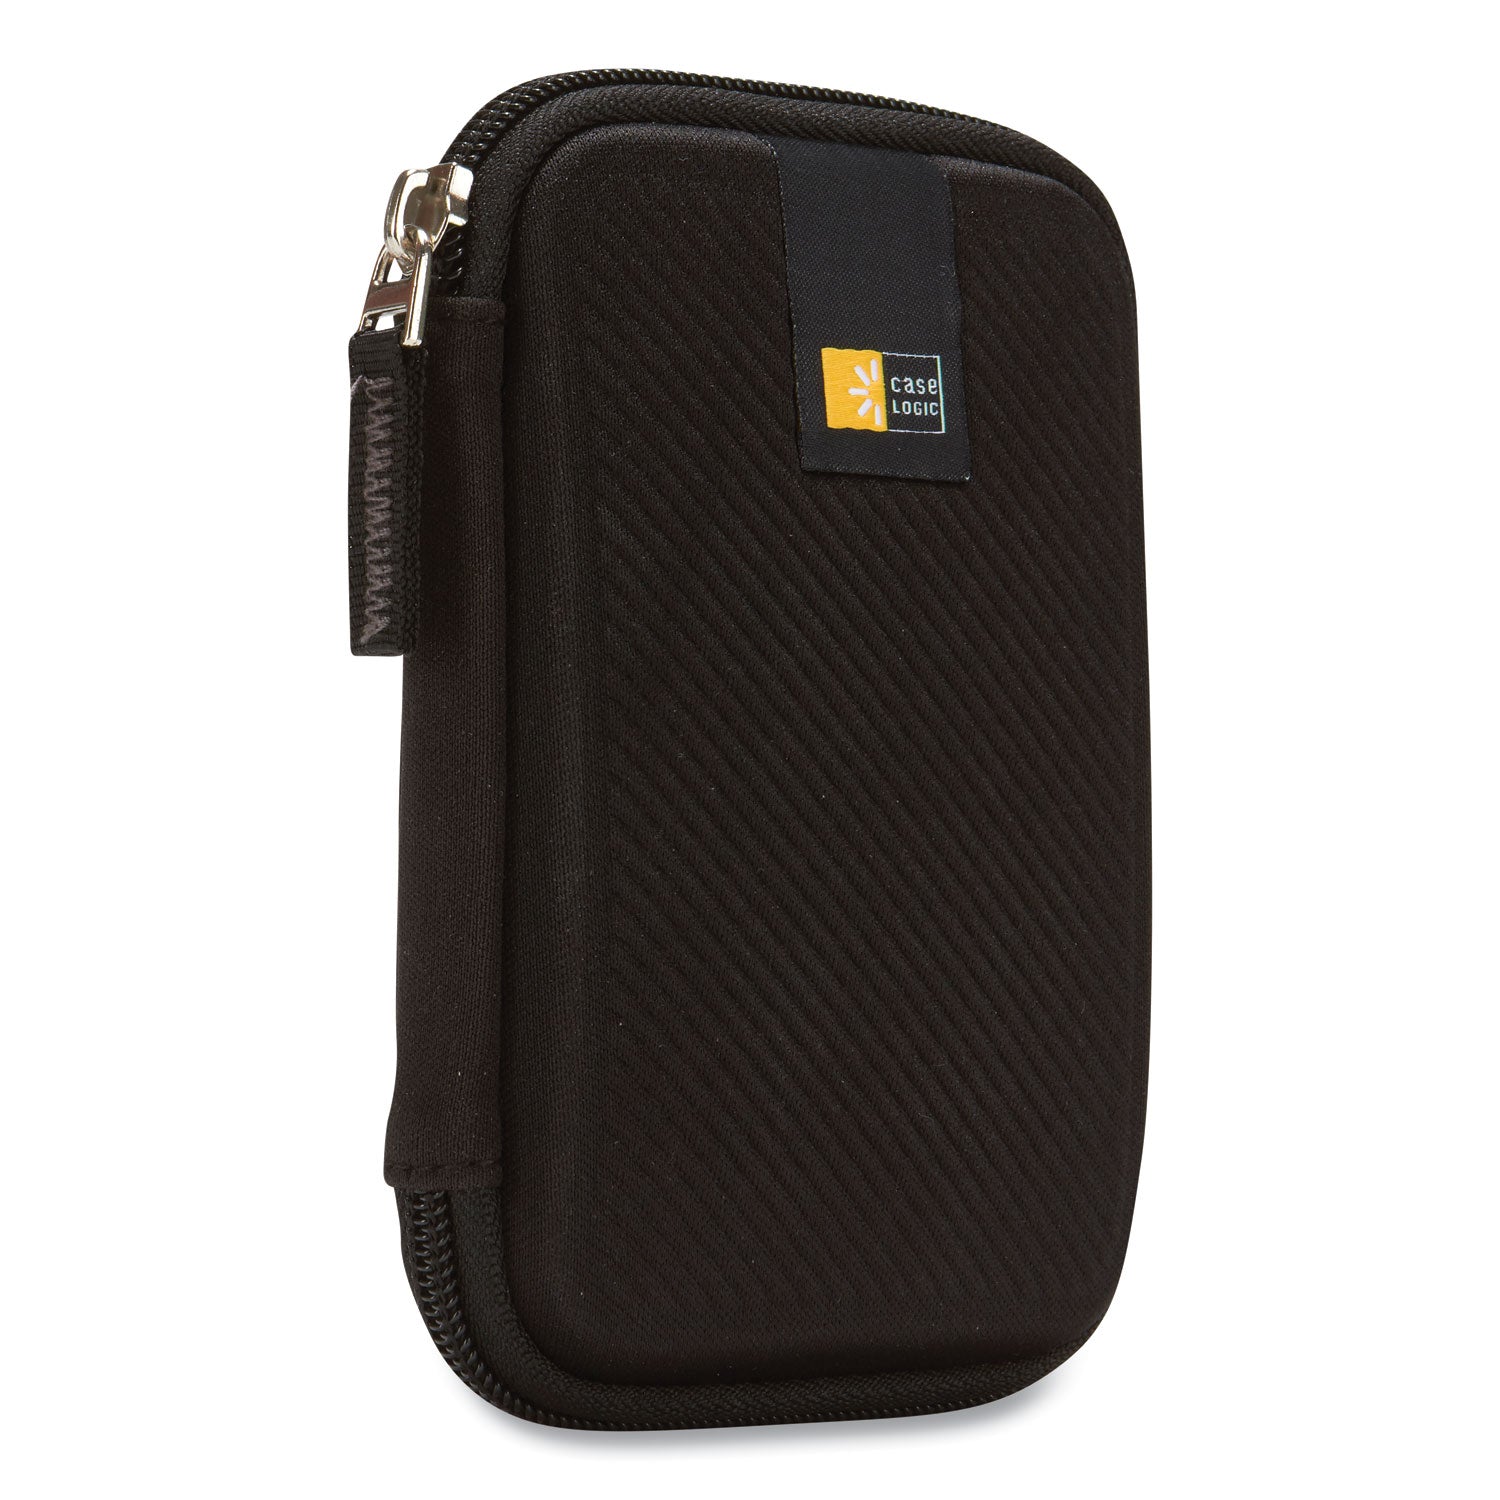 portable-hard-drive-case-molded-eva-black_clg3201314 - 2